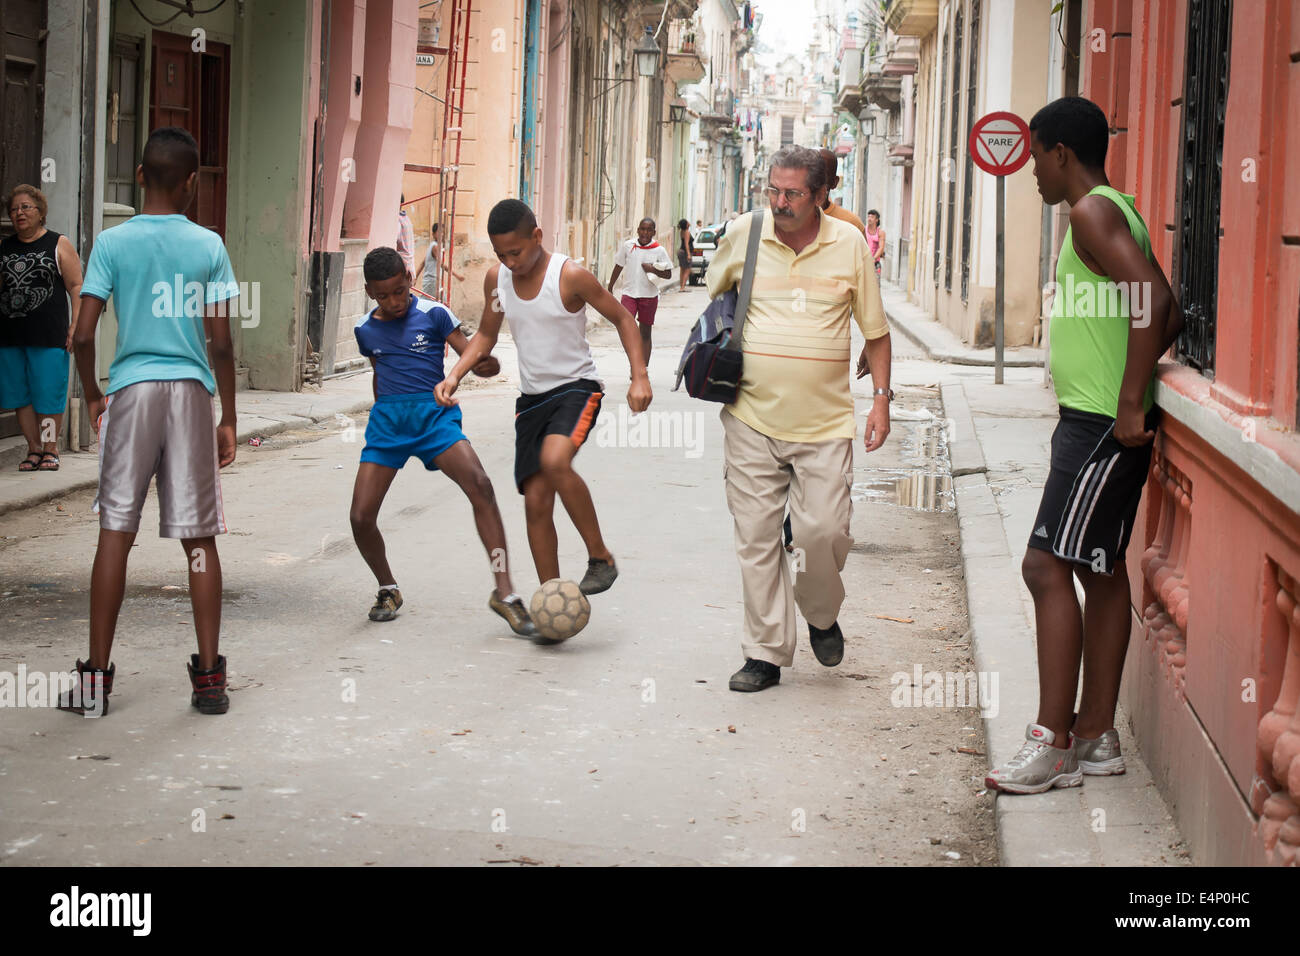 Garçons jouant avec un ballon de football dans la rue, La Havane, Cuba Banque D'Images